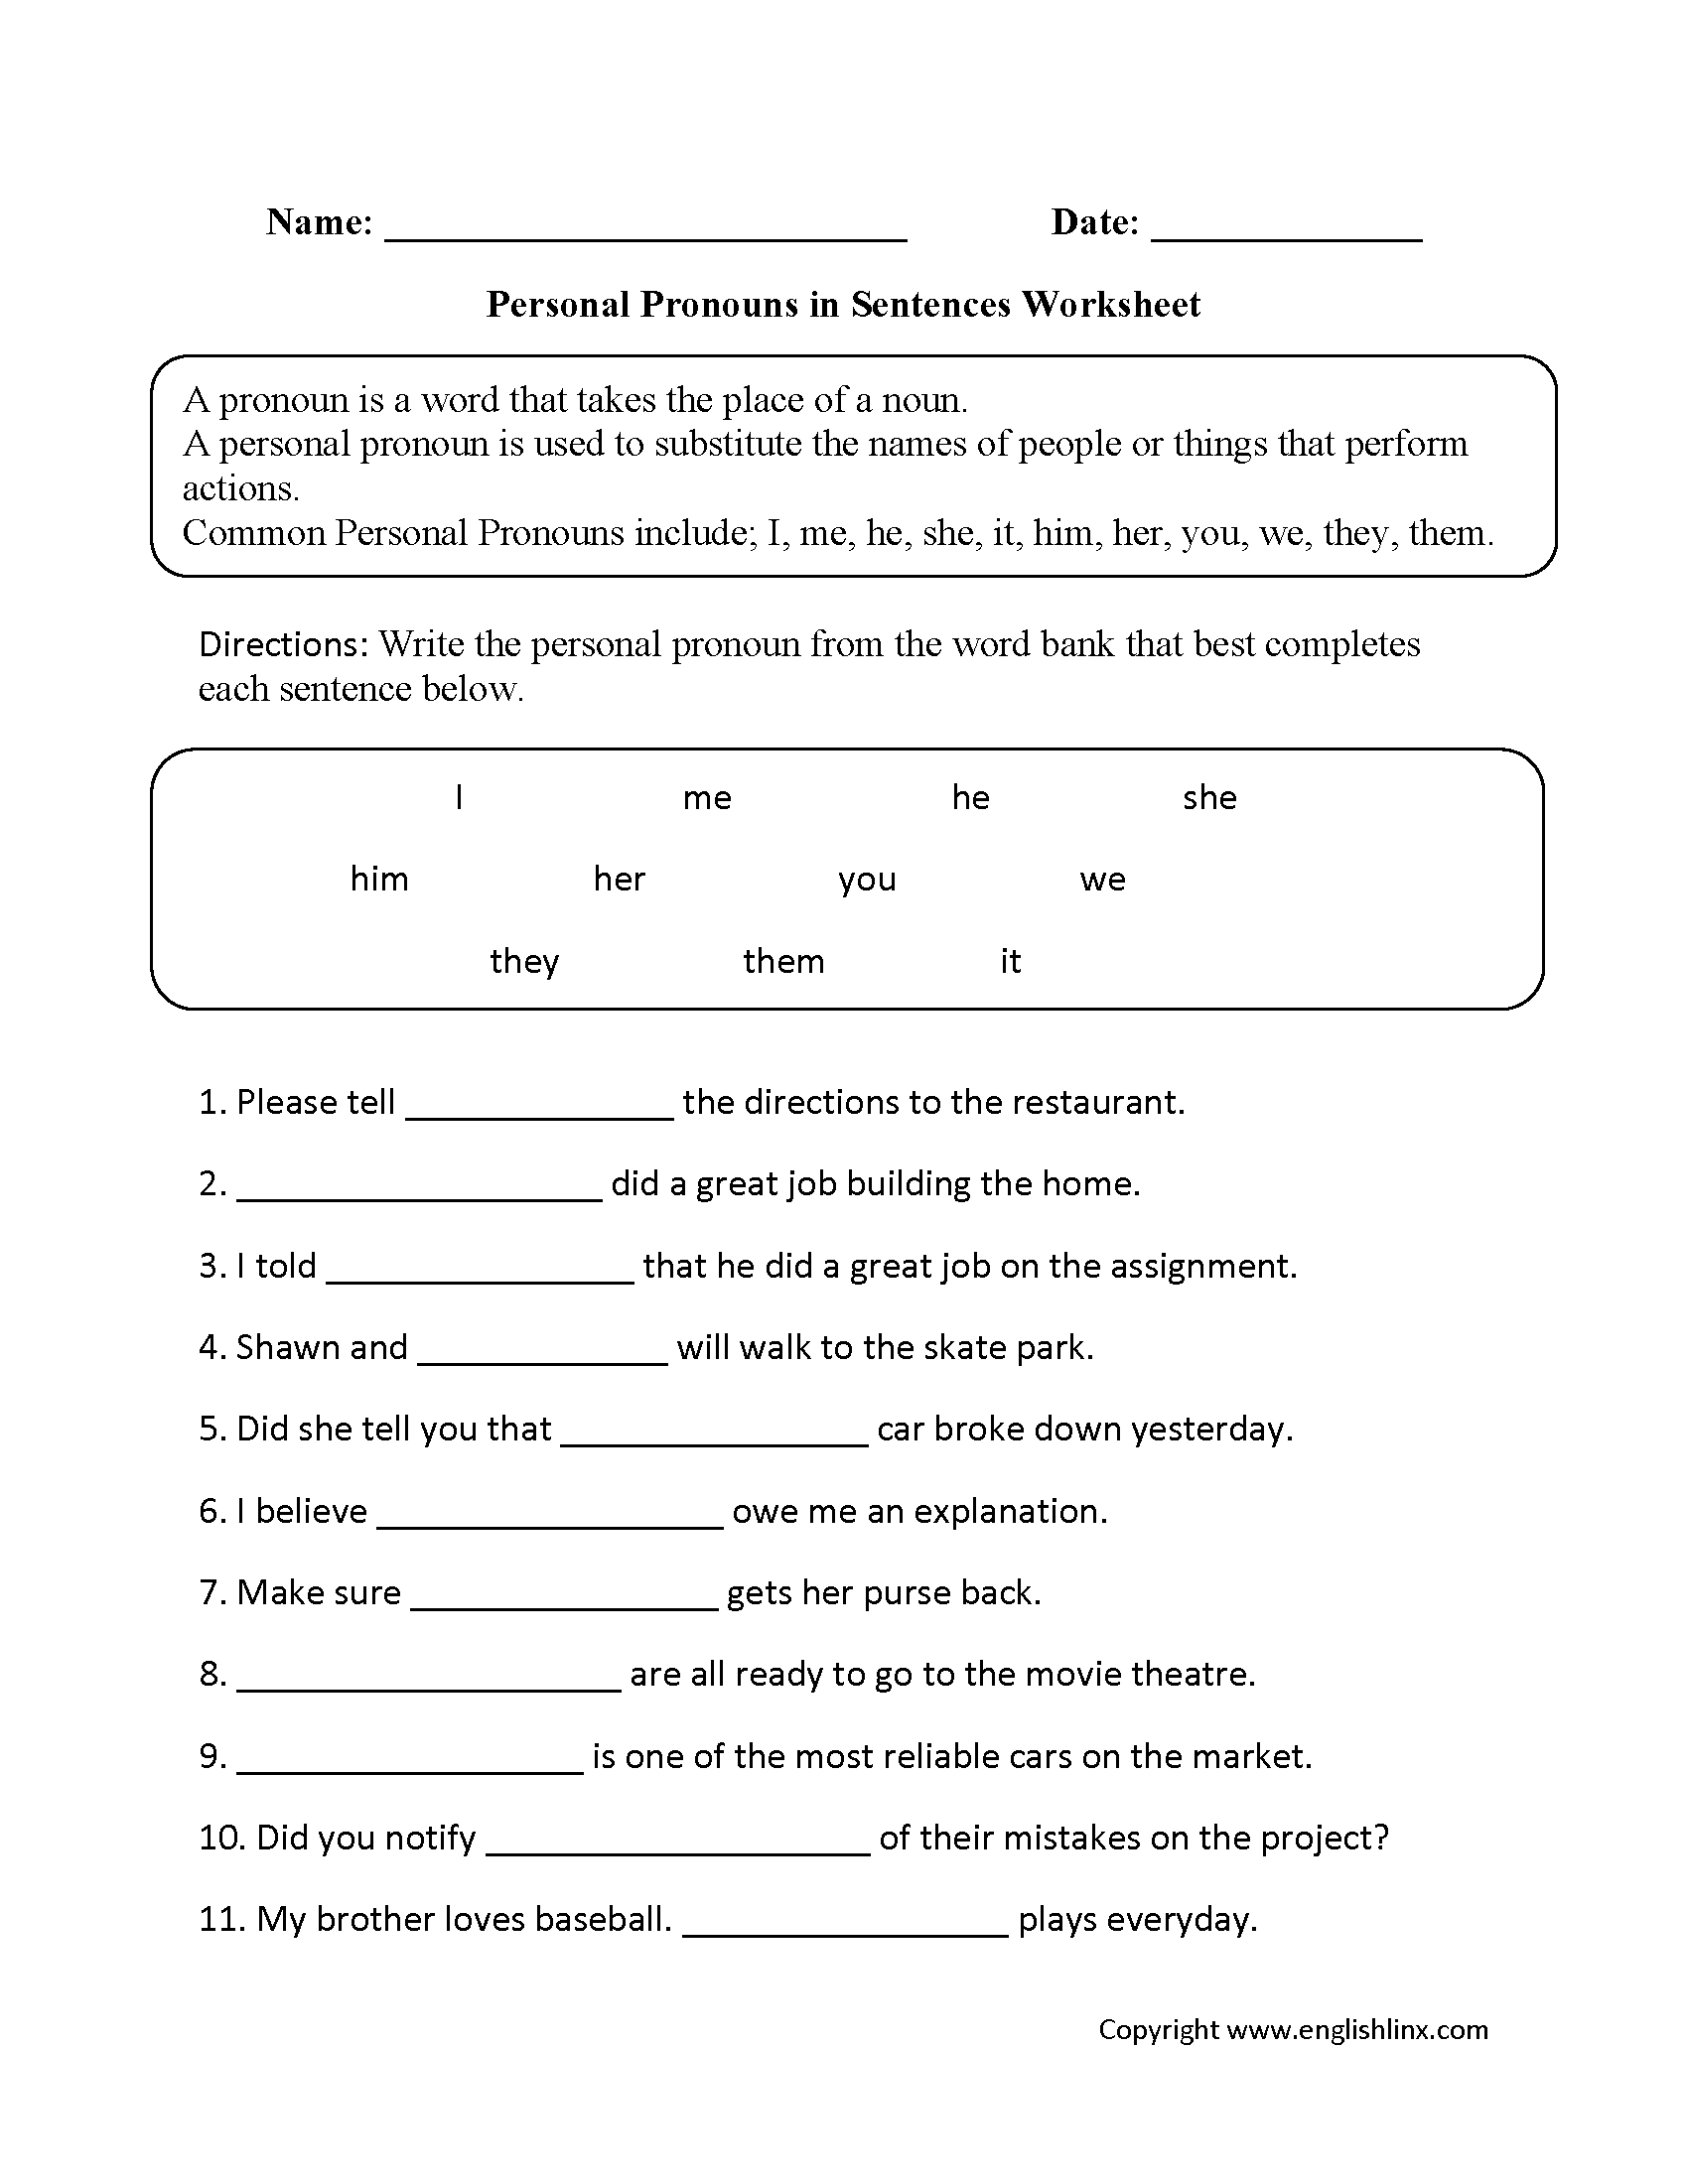 personal-pronoun-worksheet-and-exercise-pronoun-worksheets-english